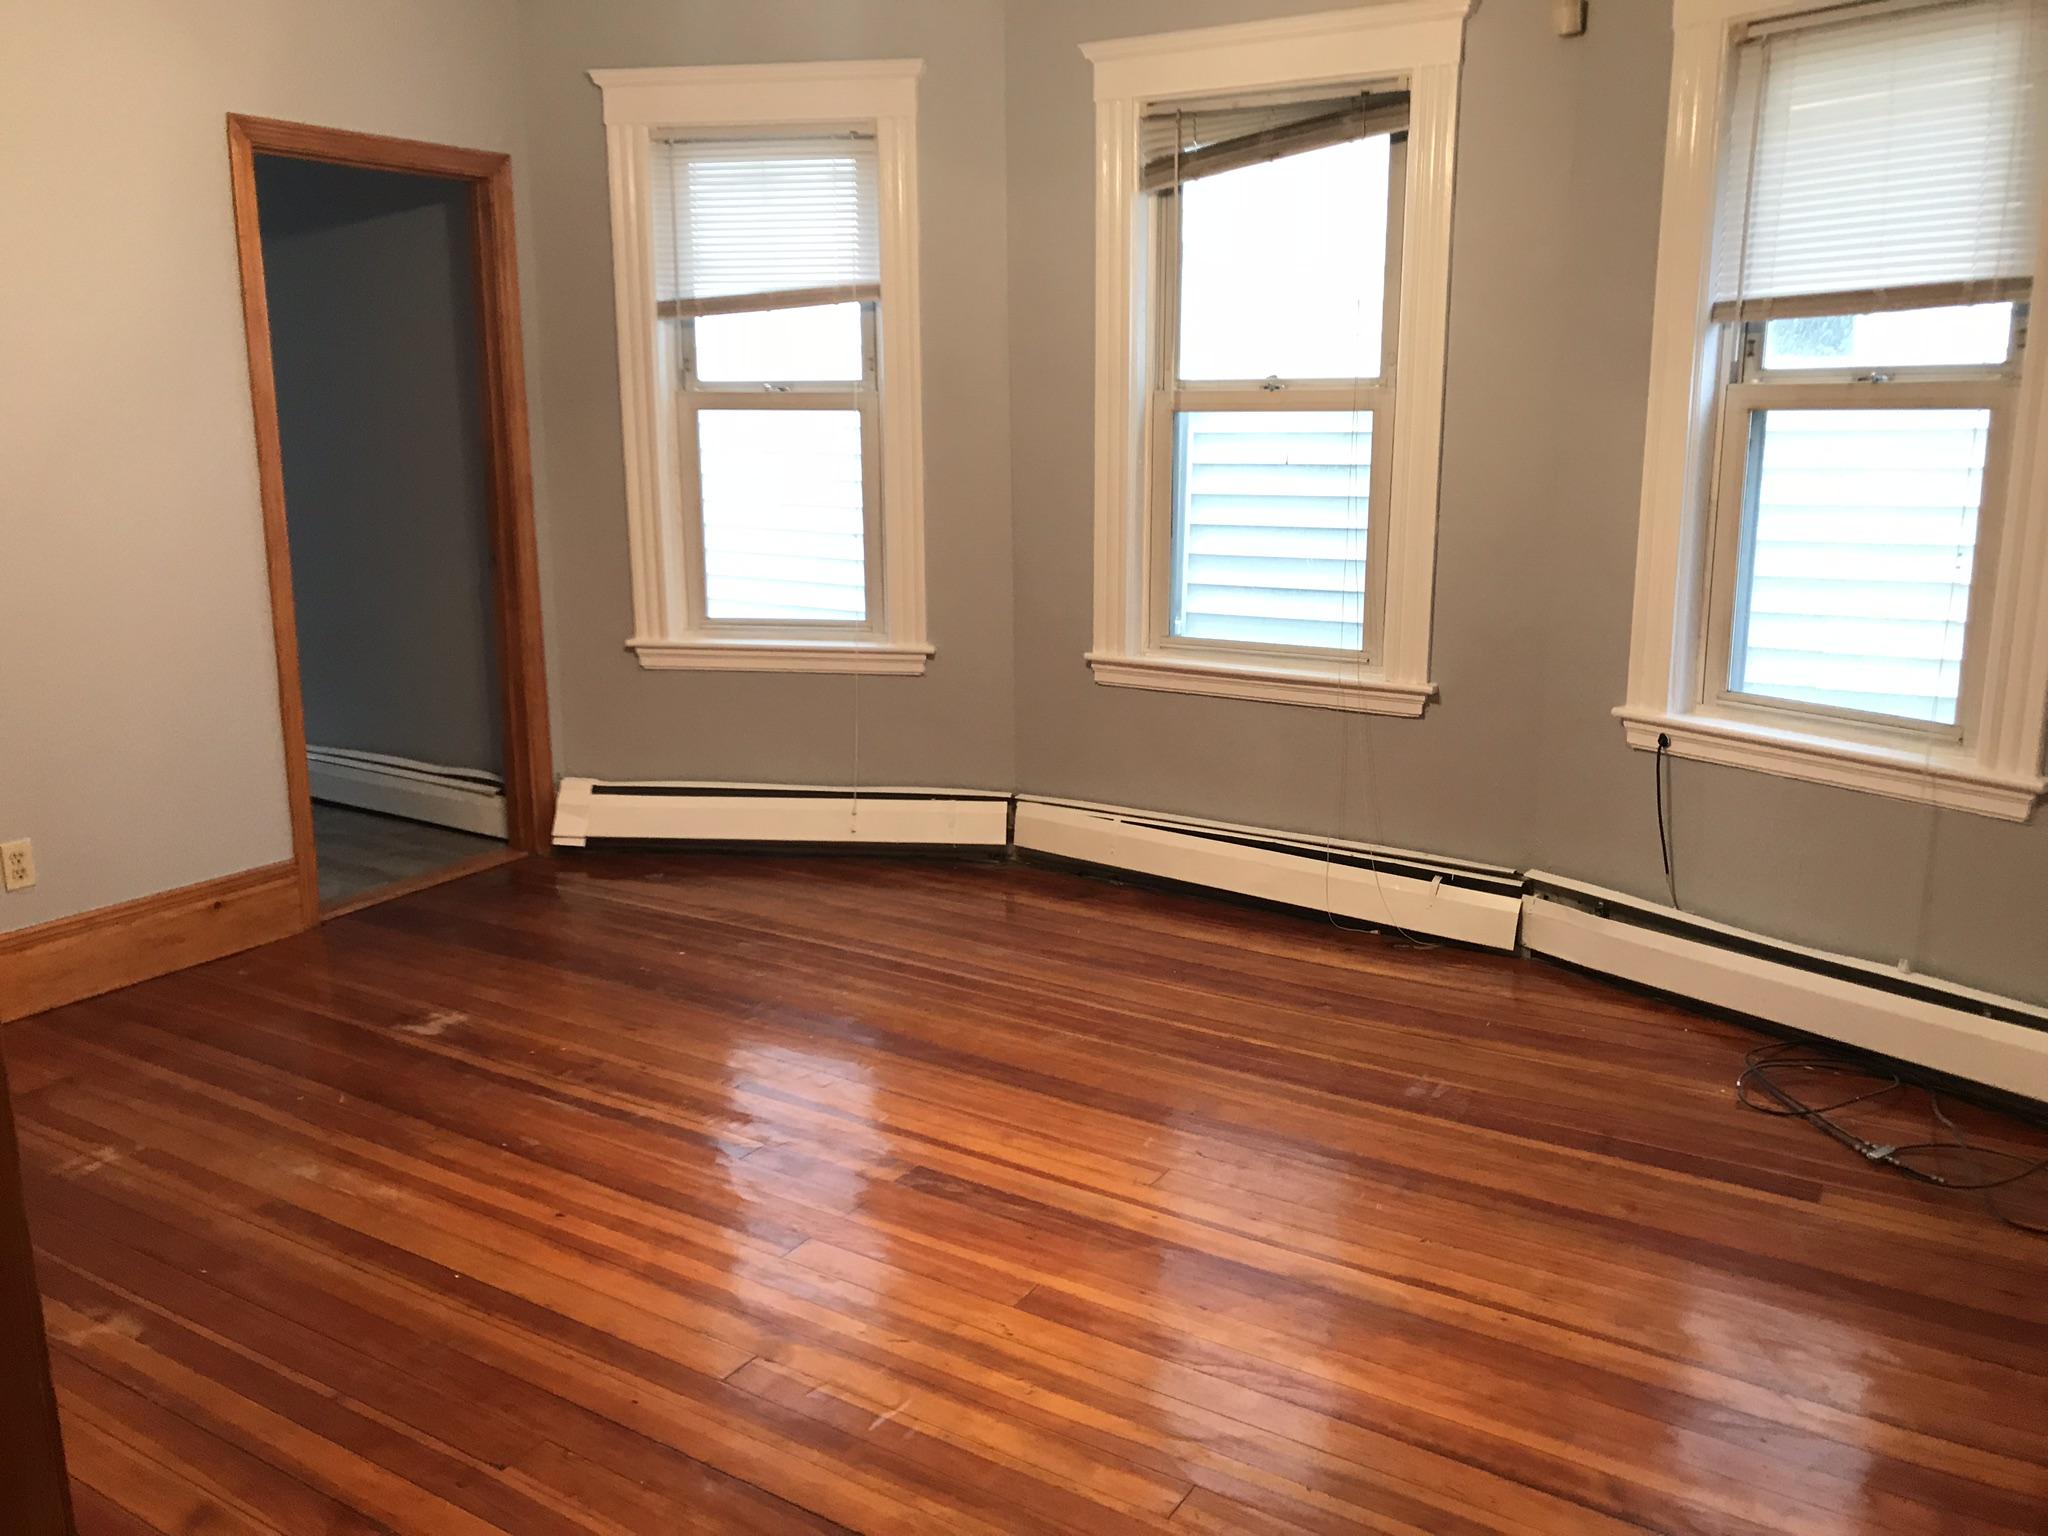 Photos of apartment on Callender St.,Boston MA 02124